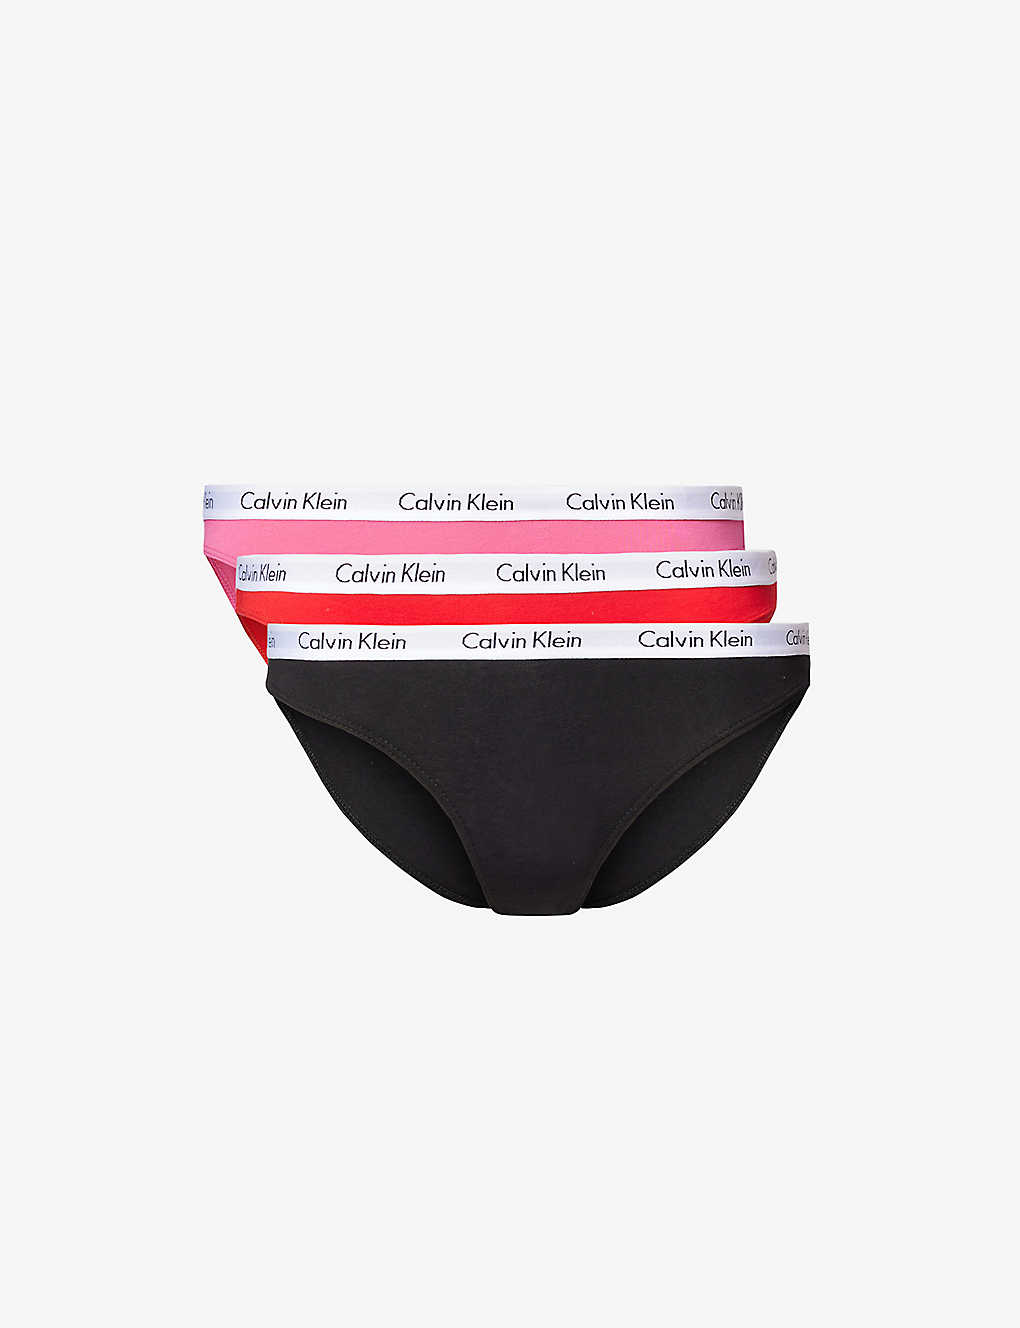 Calvin Klein Carousel Pack Of Three Stretch-cotton Jersey Briefs In Black/rouge/fuchsia